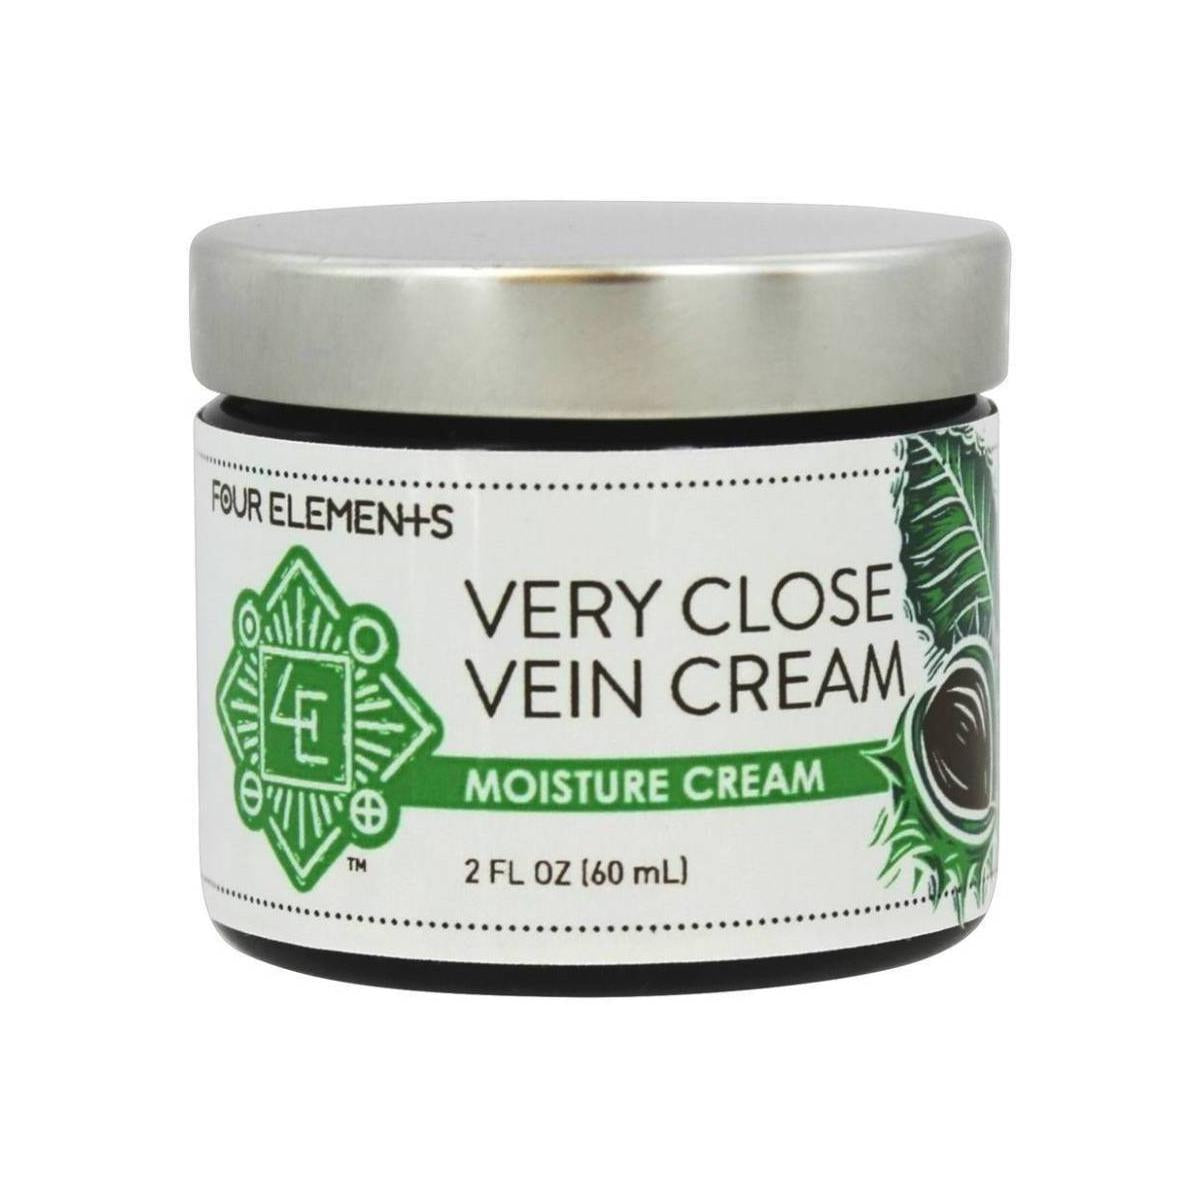 Primary image of Very Close Vein Cream Moisture Cream